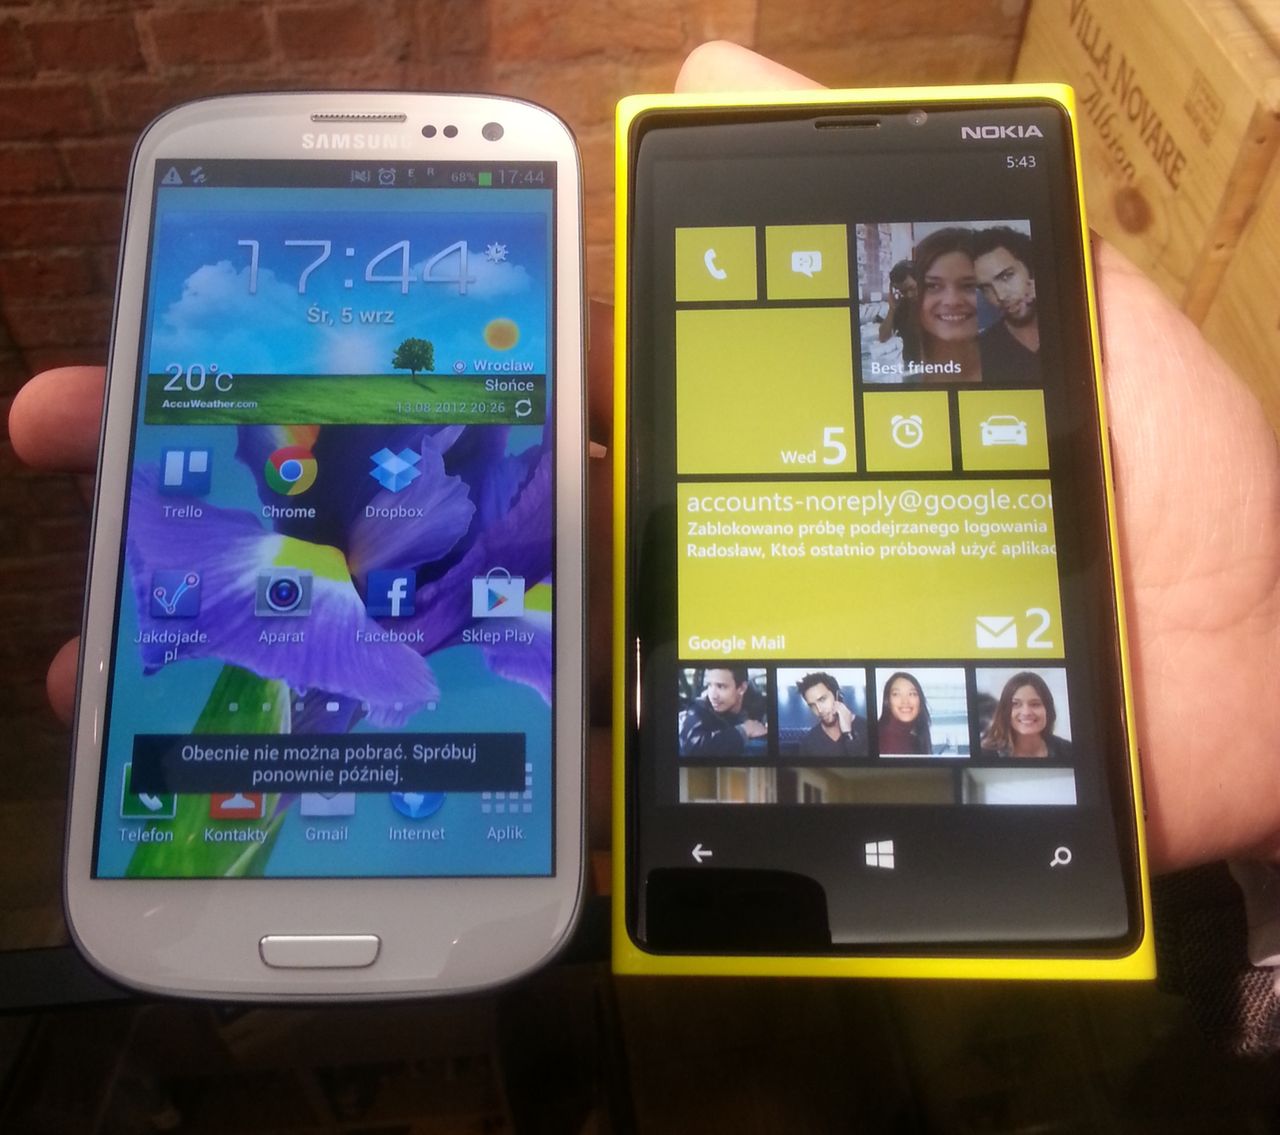 Galaxy S III vs Nokia Lumia 920 (fot. Krzystof Kurek)